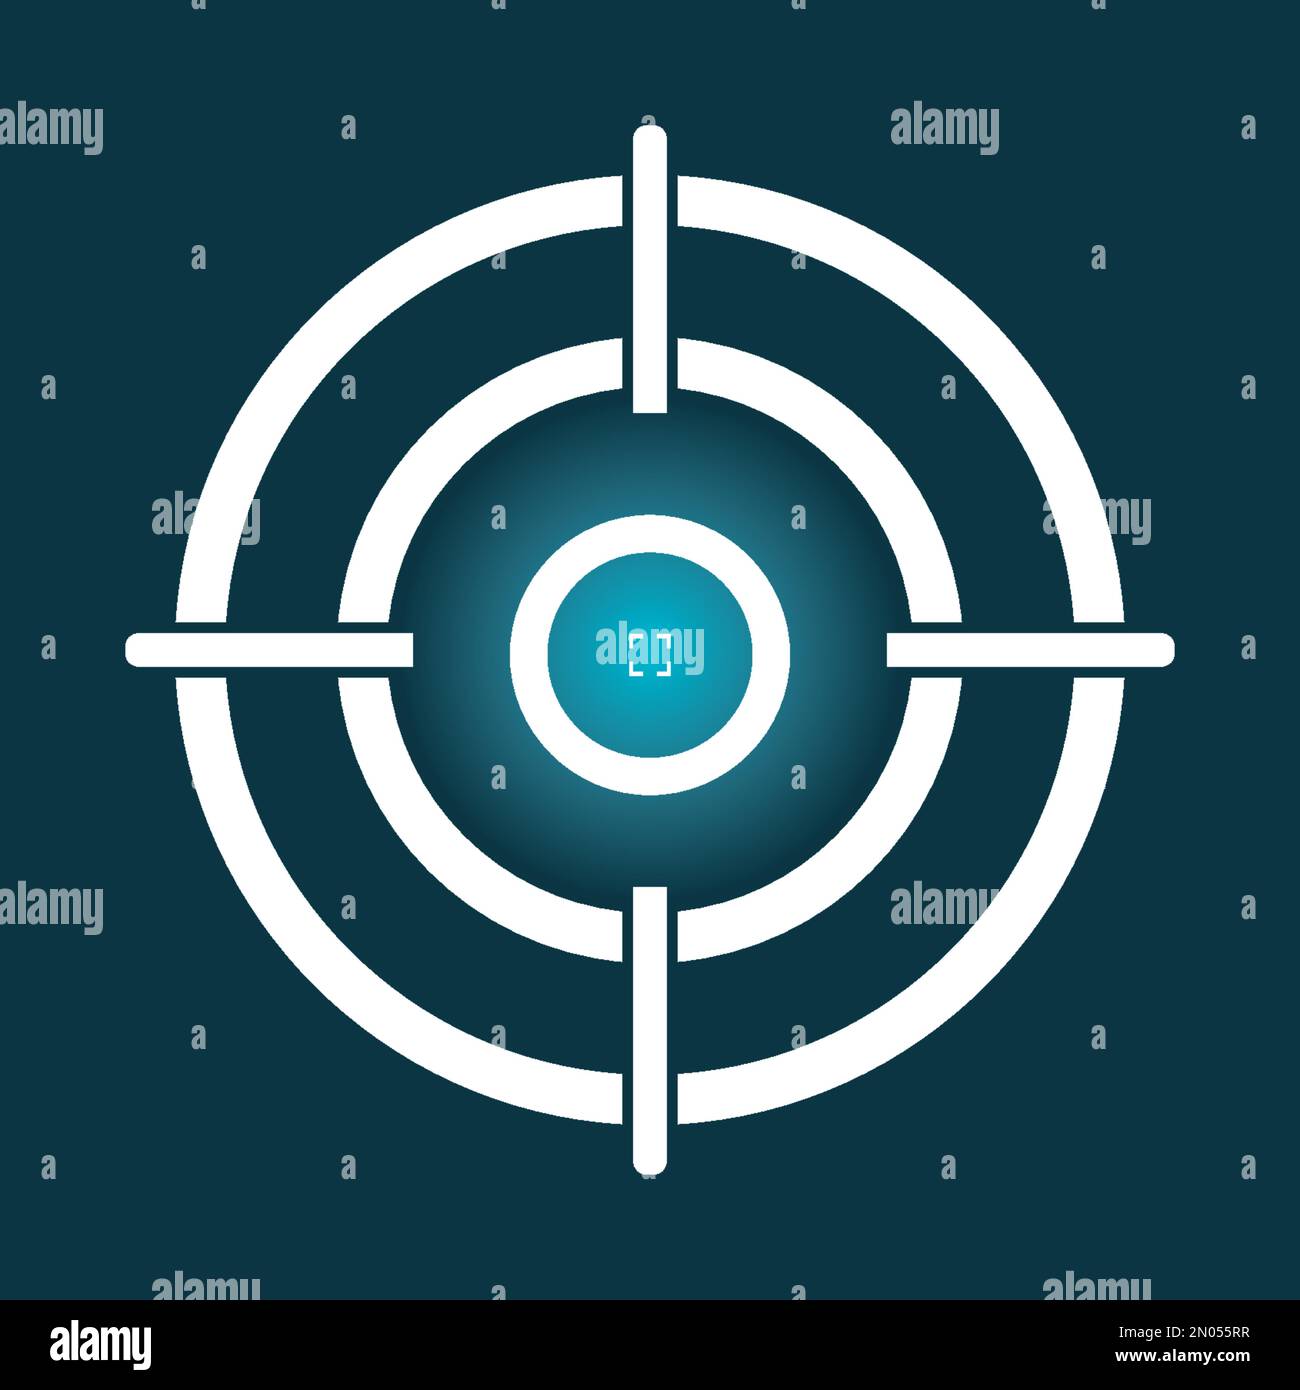 Target icon symbol vector,design background Stock Vector